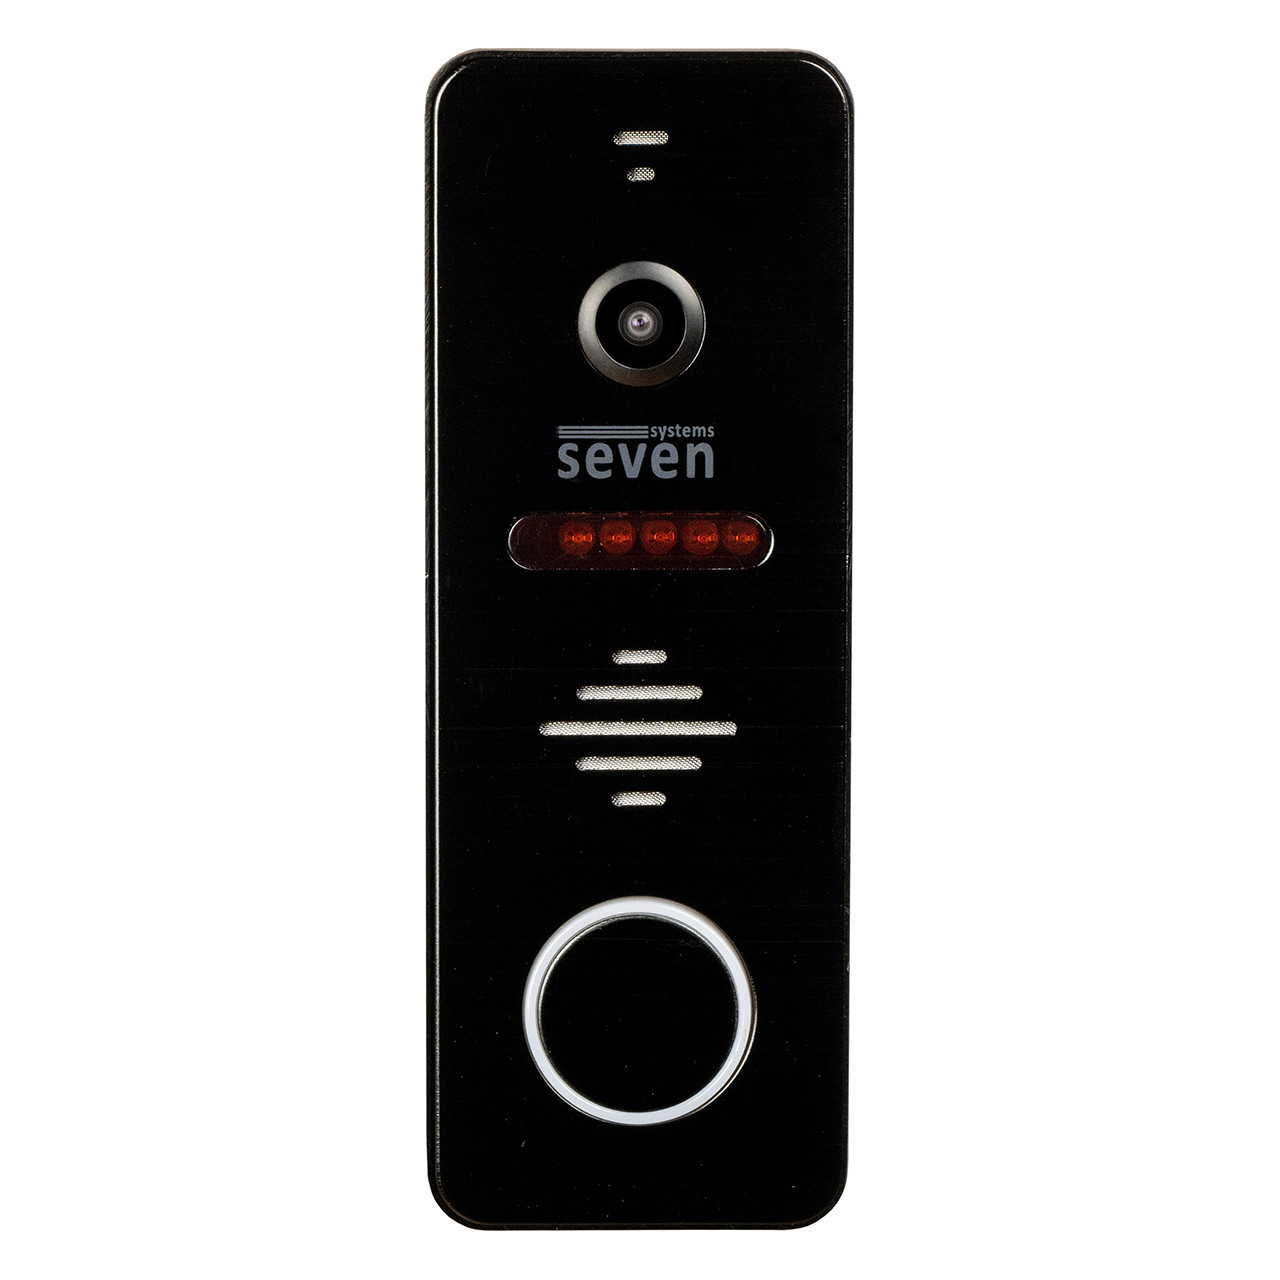 Виклична панель Seven Systems CP-7504 FHD Black